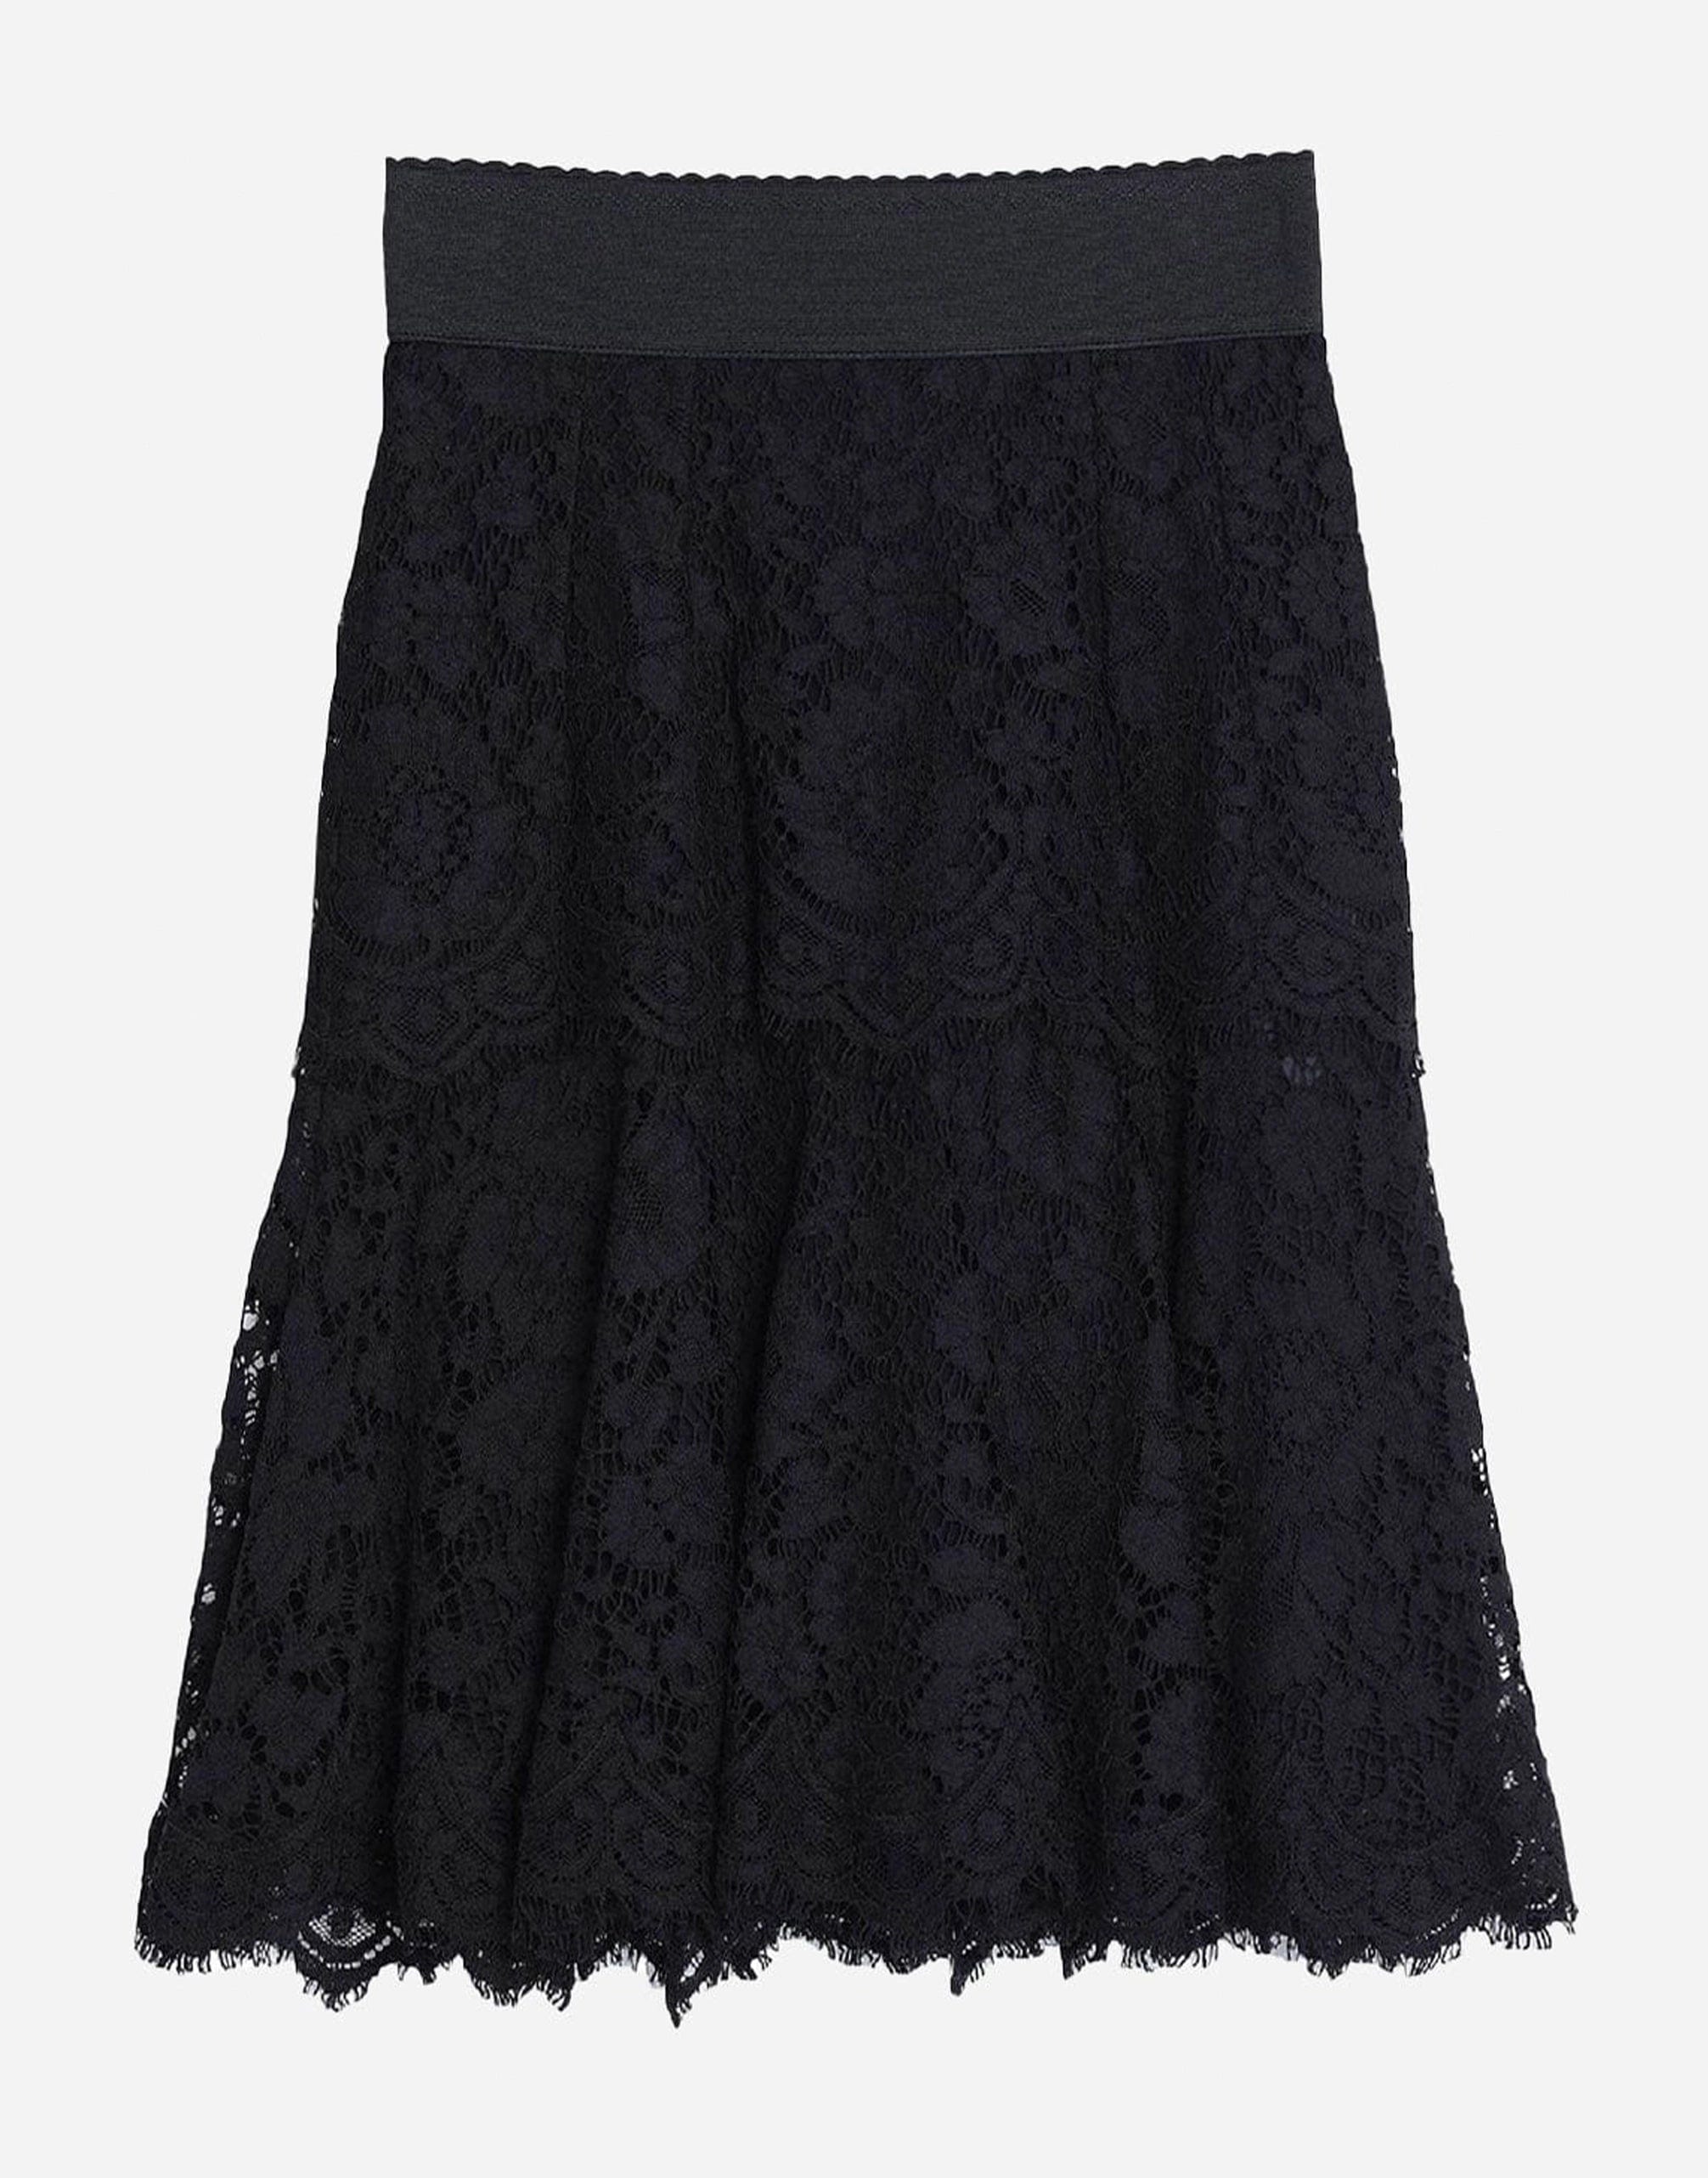 Dolce & Gabbana Floral Lace Mini Skirt